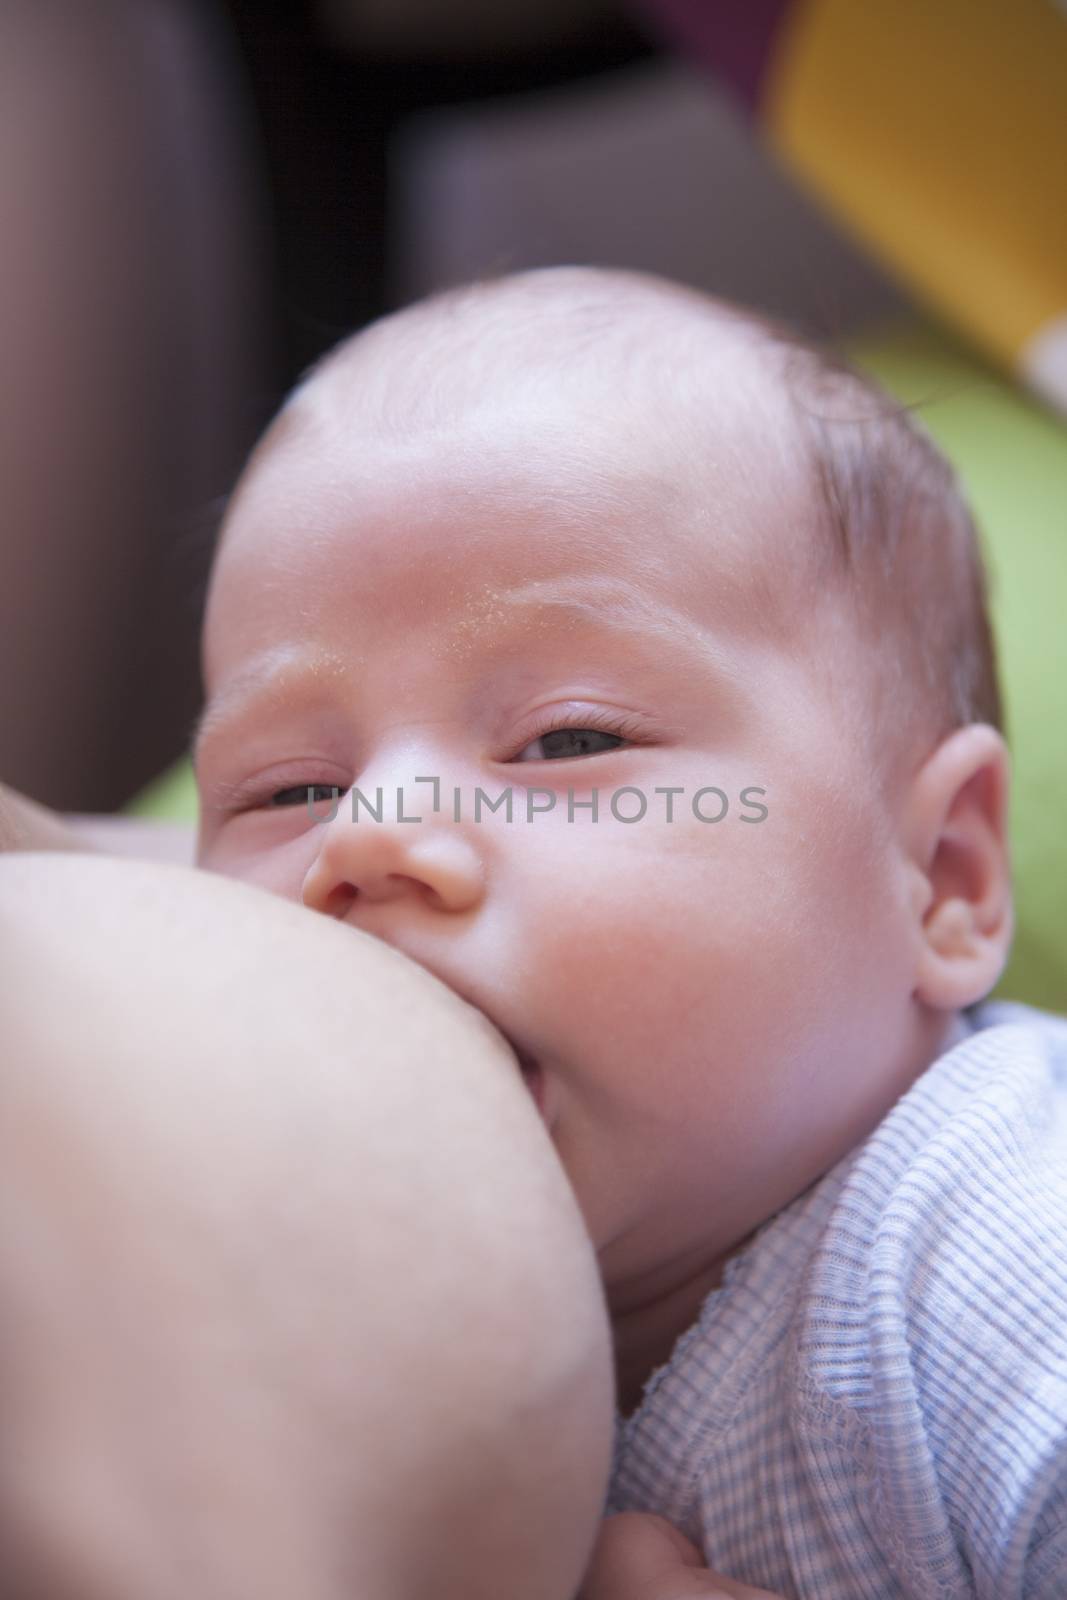 one month age tender lovely newborn baby open eyes blue shirt breastfeeding nursing mother breast